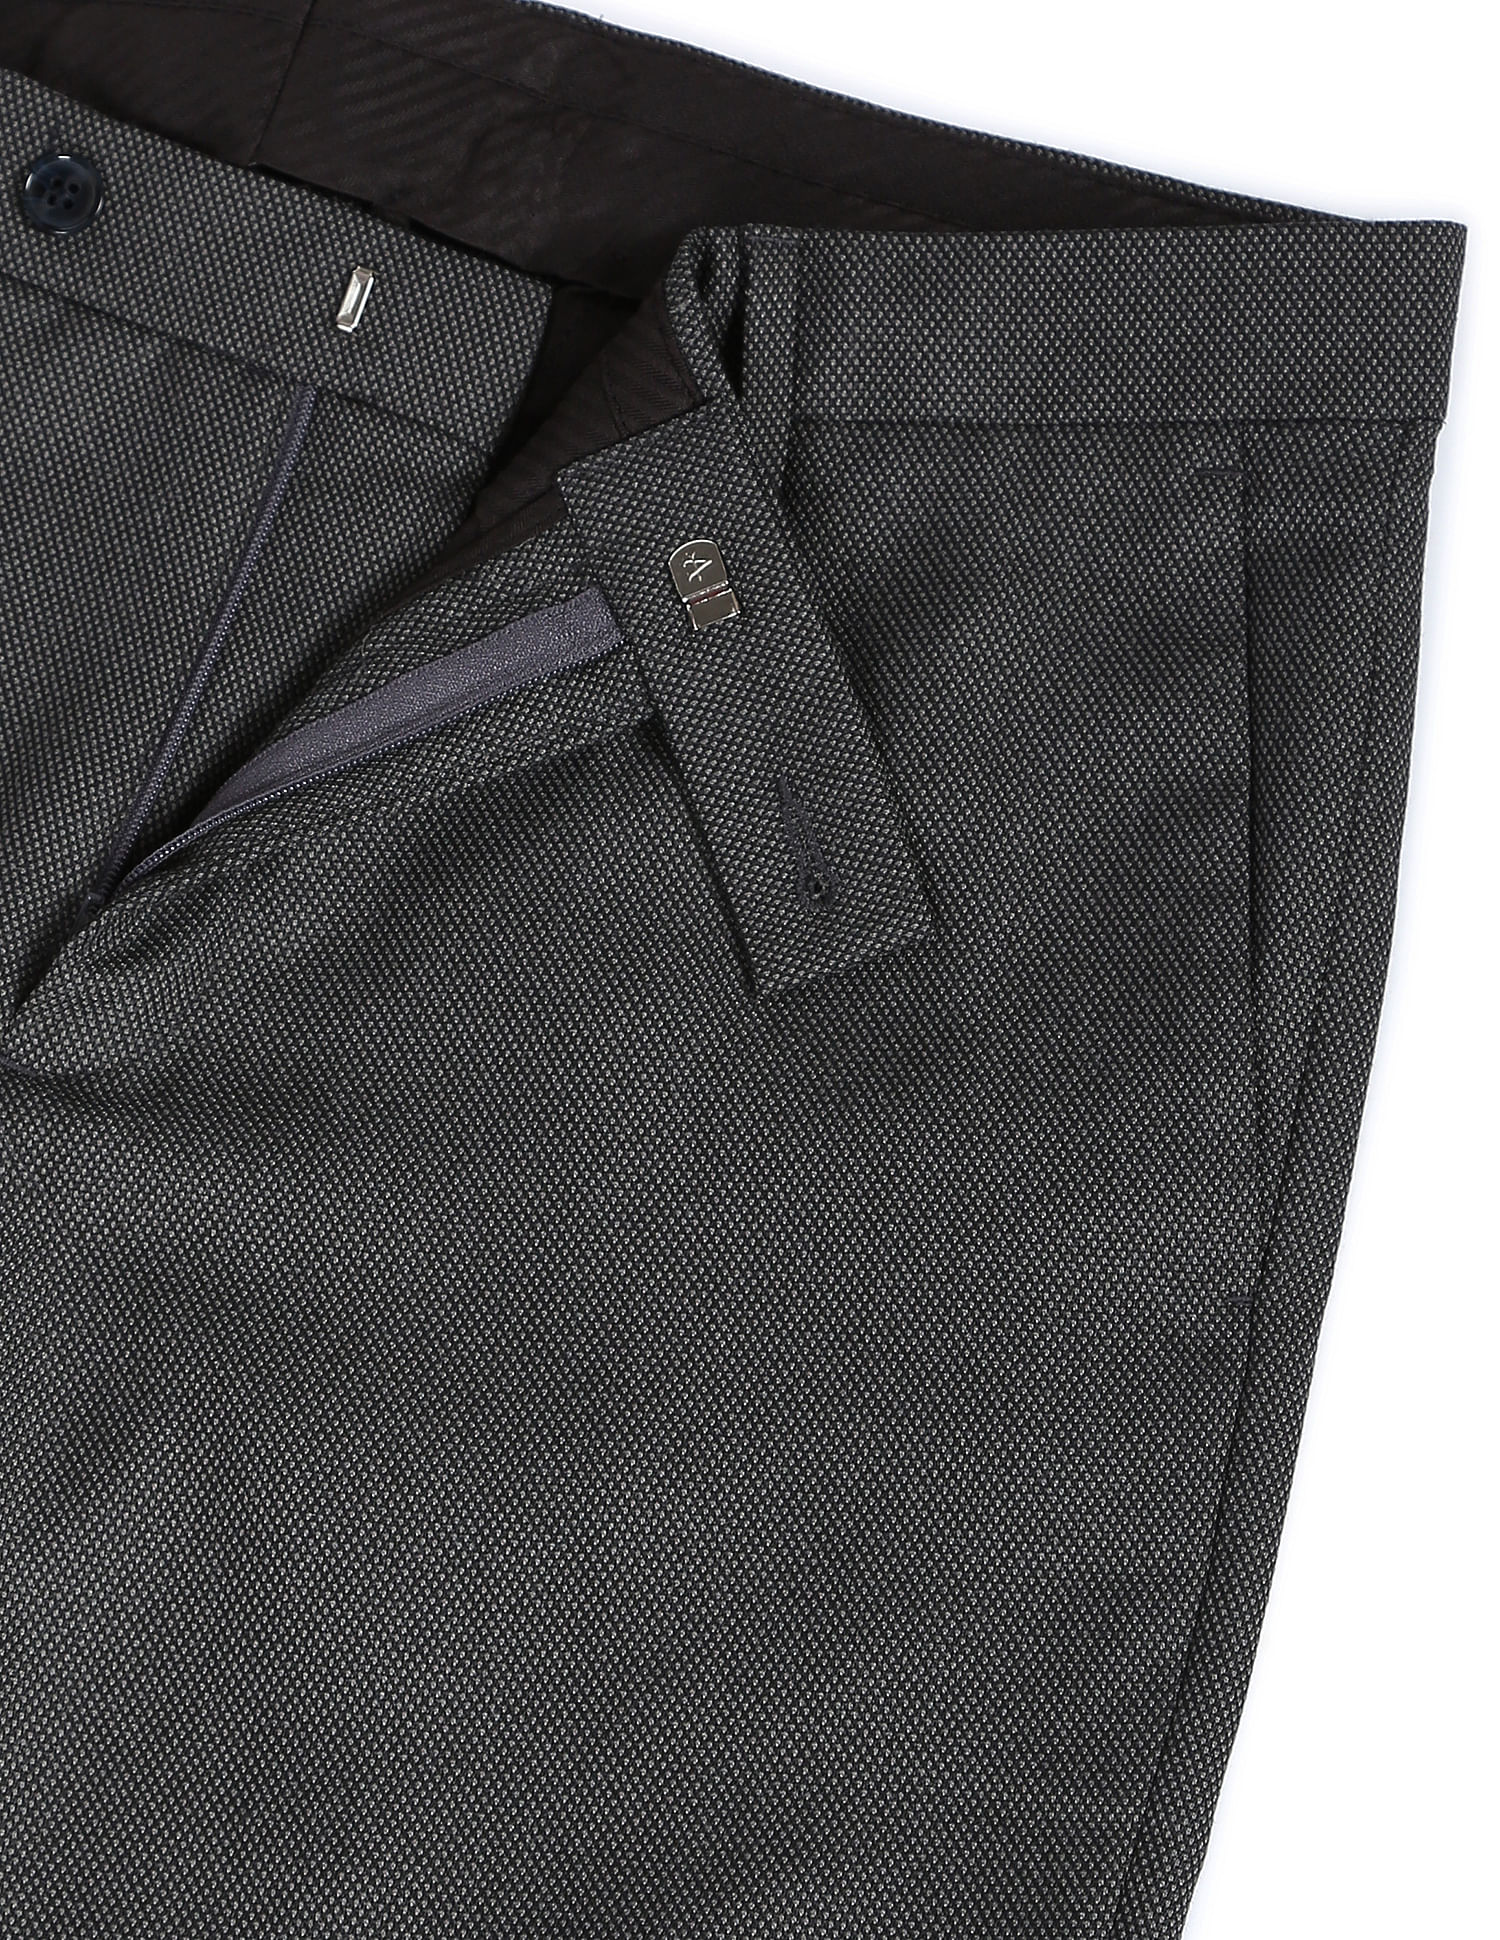 Buy Arrow Patterned Weave Twill Smart Flex Formal Trousers - NNNOW.com